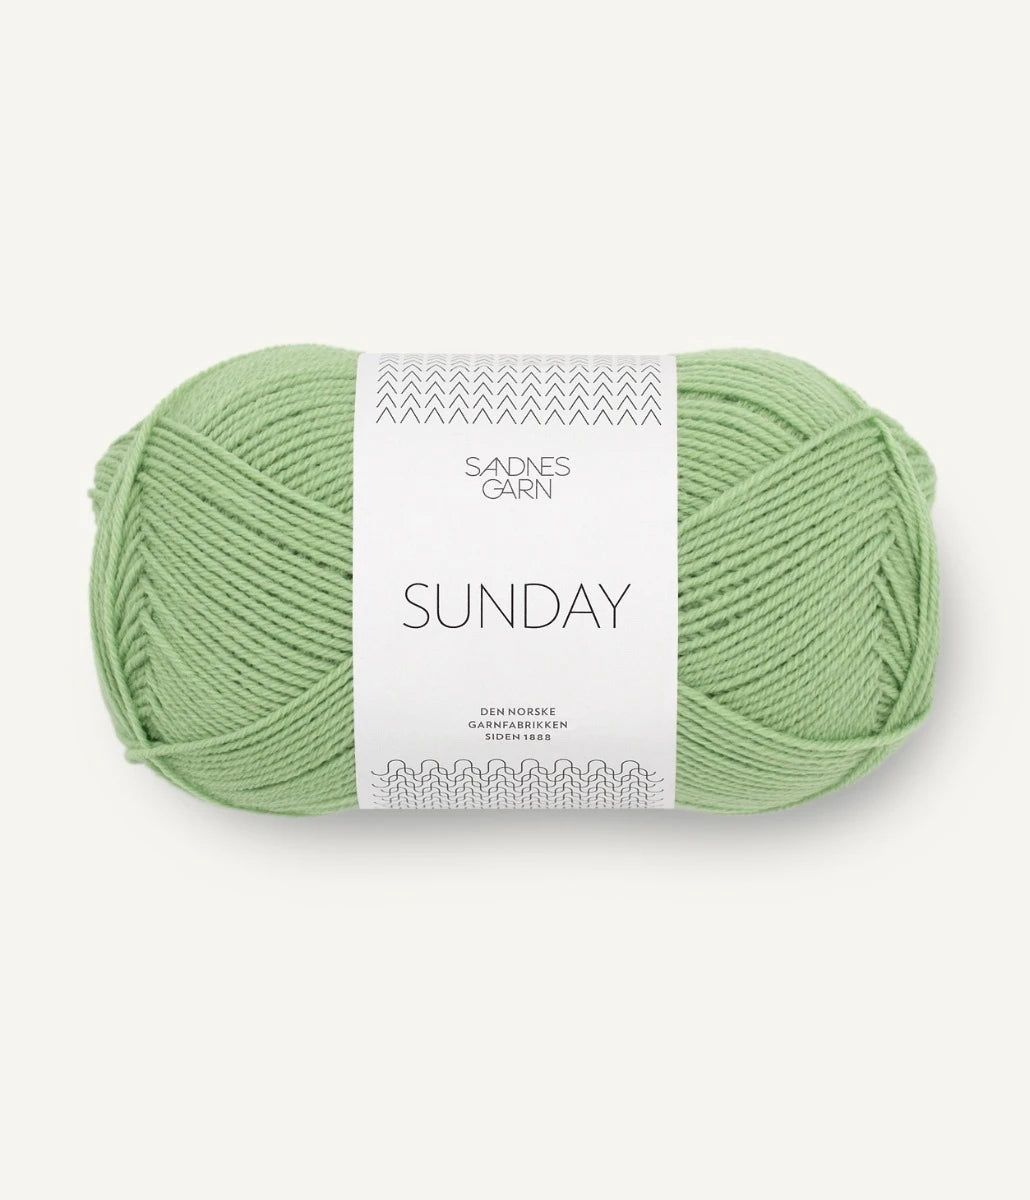 Kuvassa on Sandnes Garn Sunday lanka (yarn) värissä Spring Green.